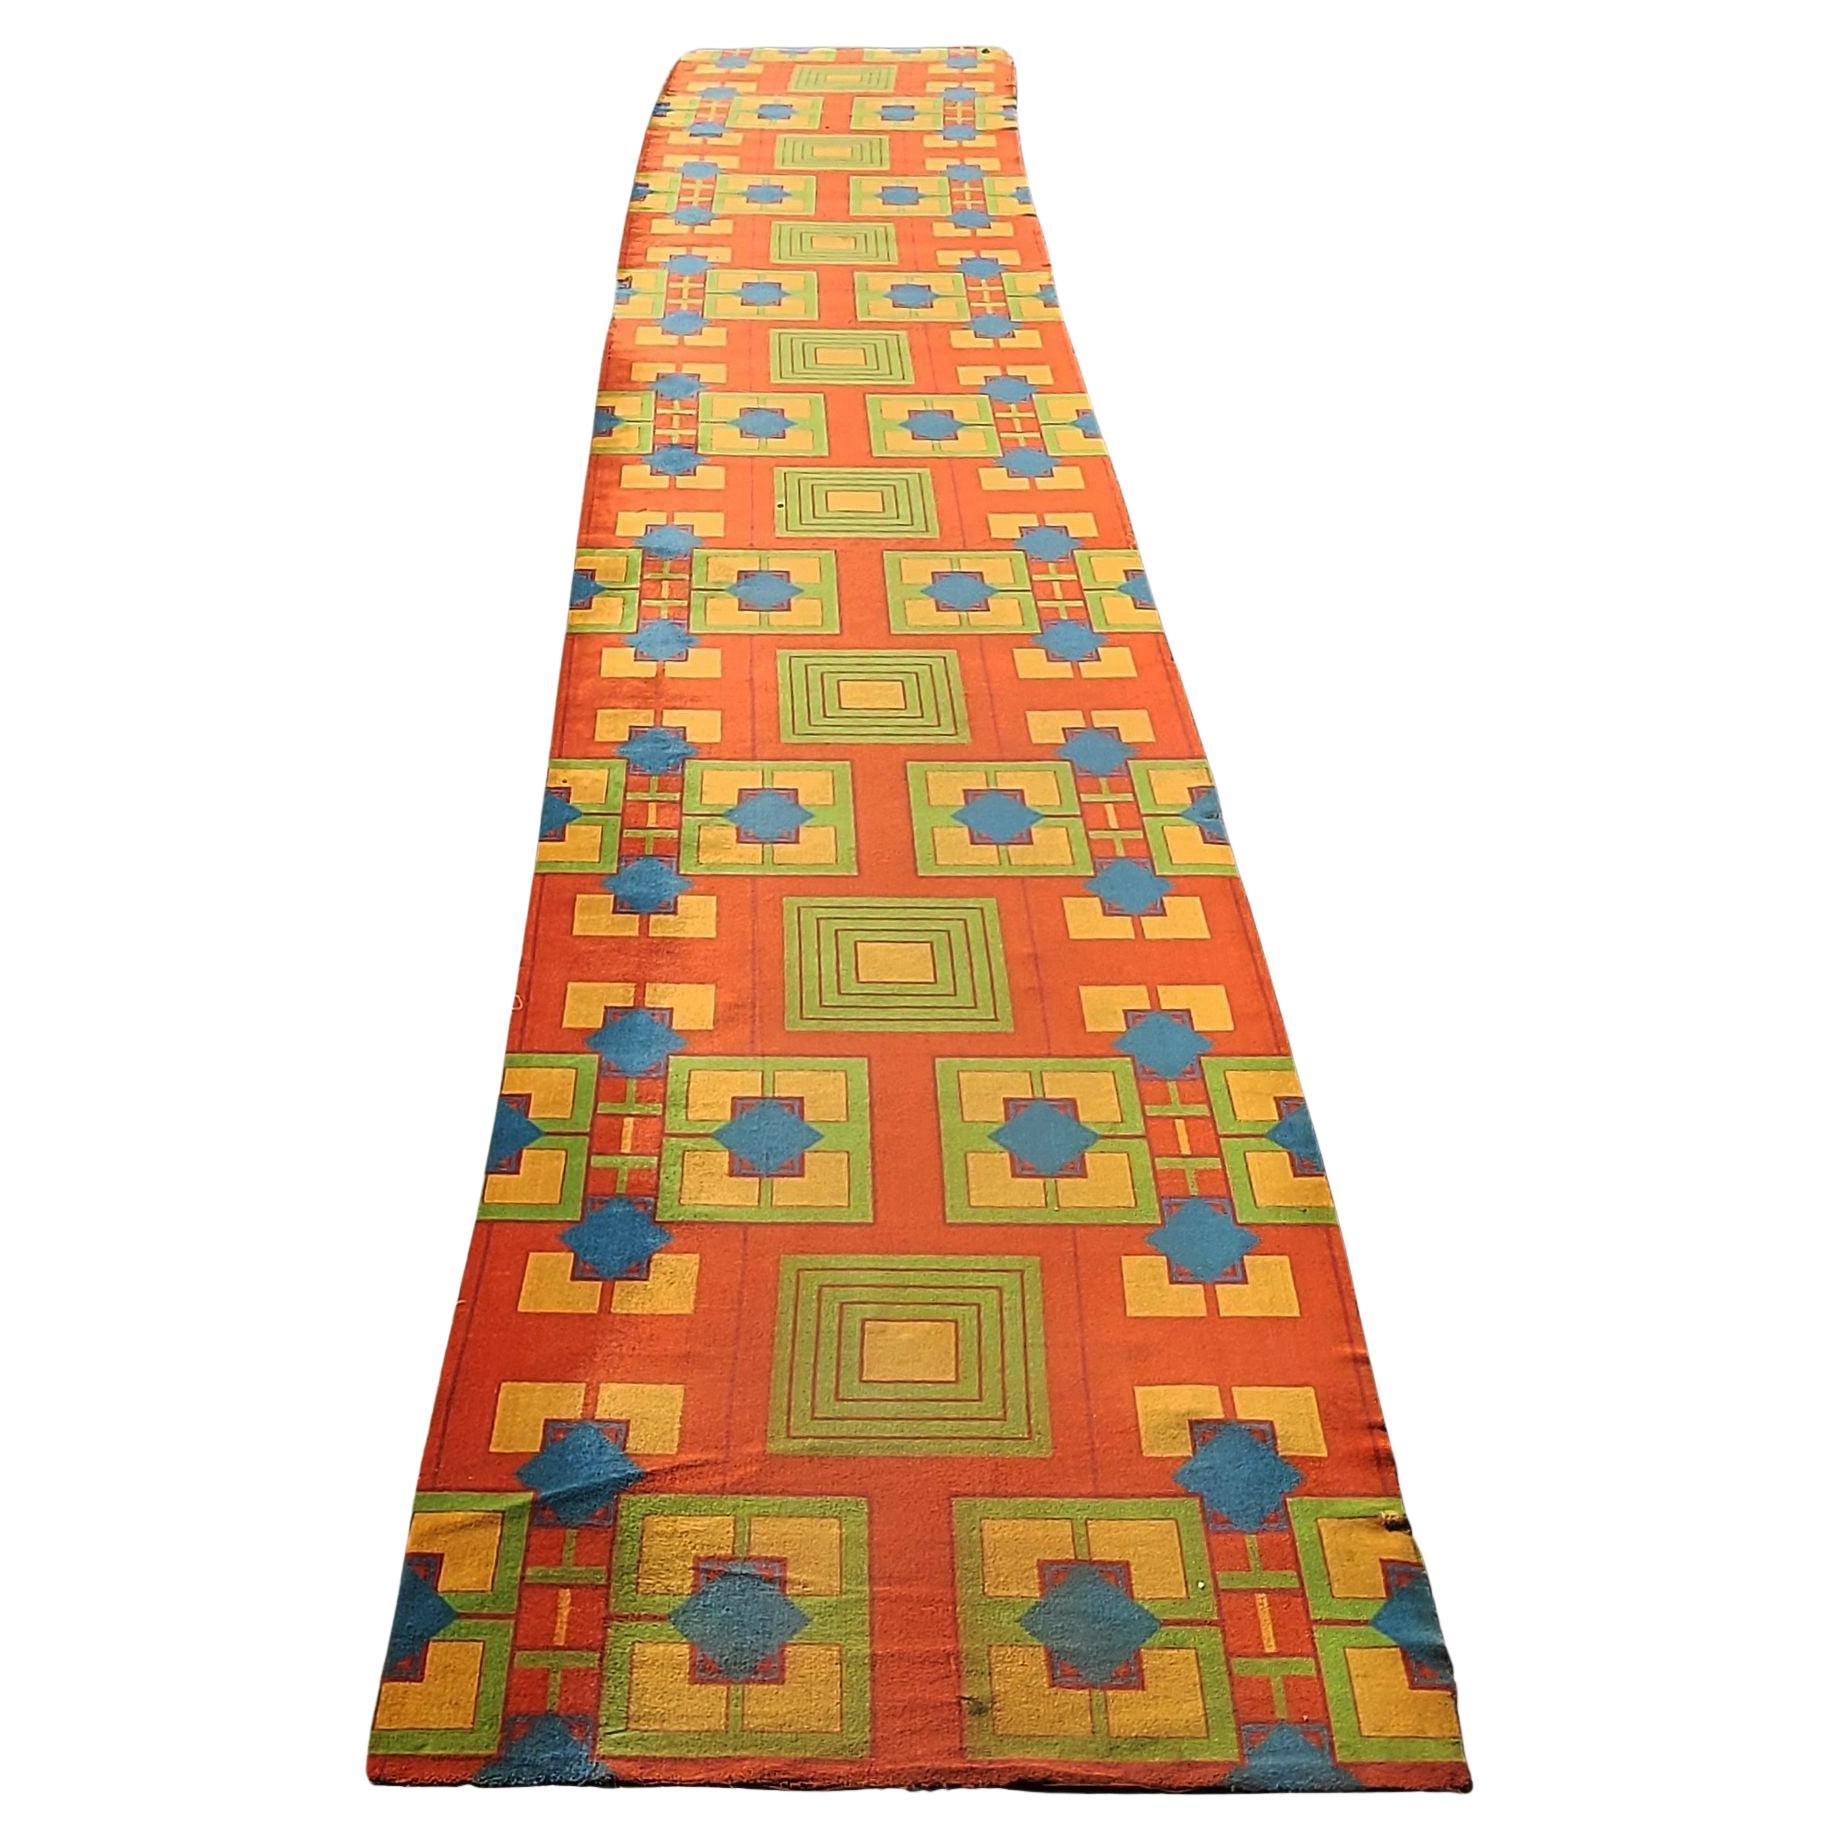 Original 6' 5" X 37' Art-Déco-Revival-Teppich aus dem Arizona Biltmore im Angebot